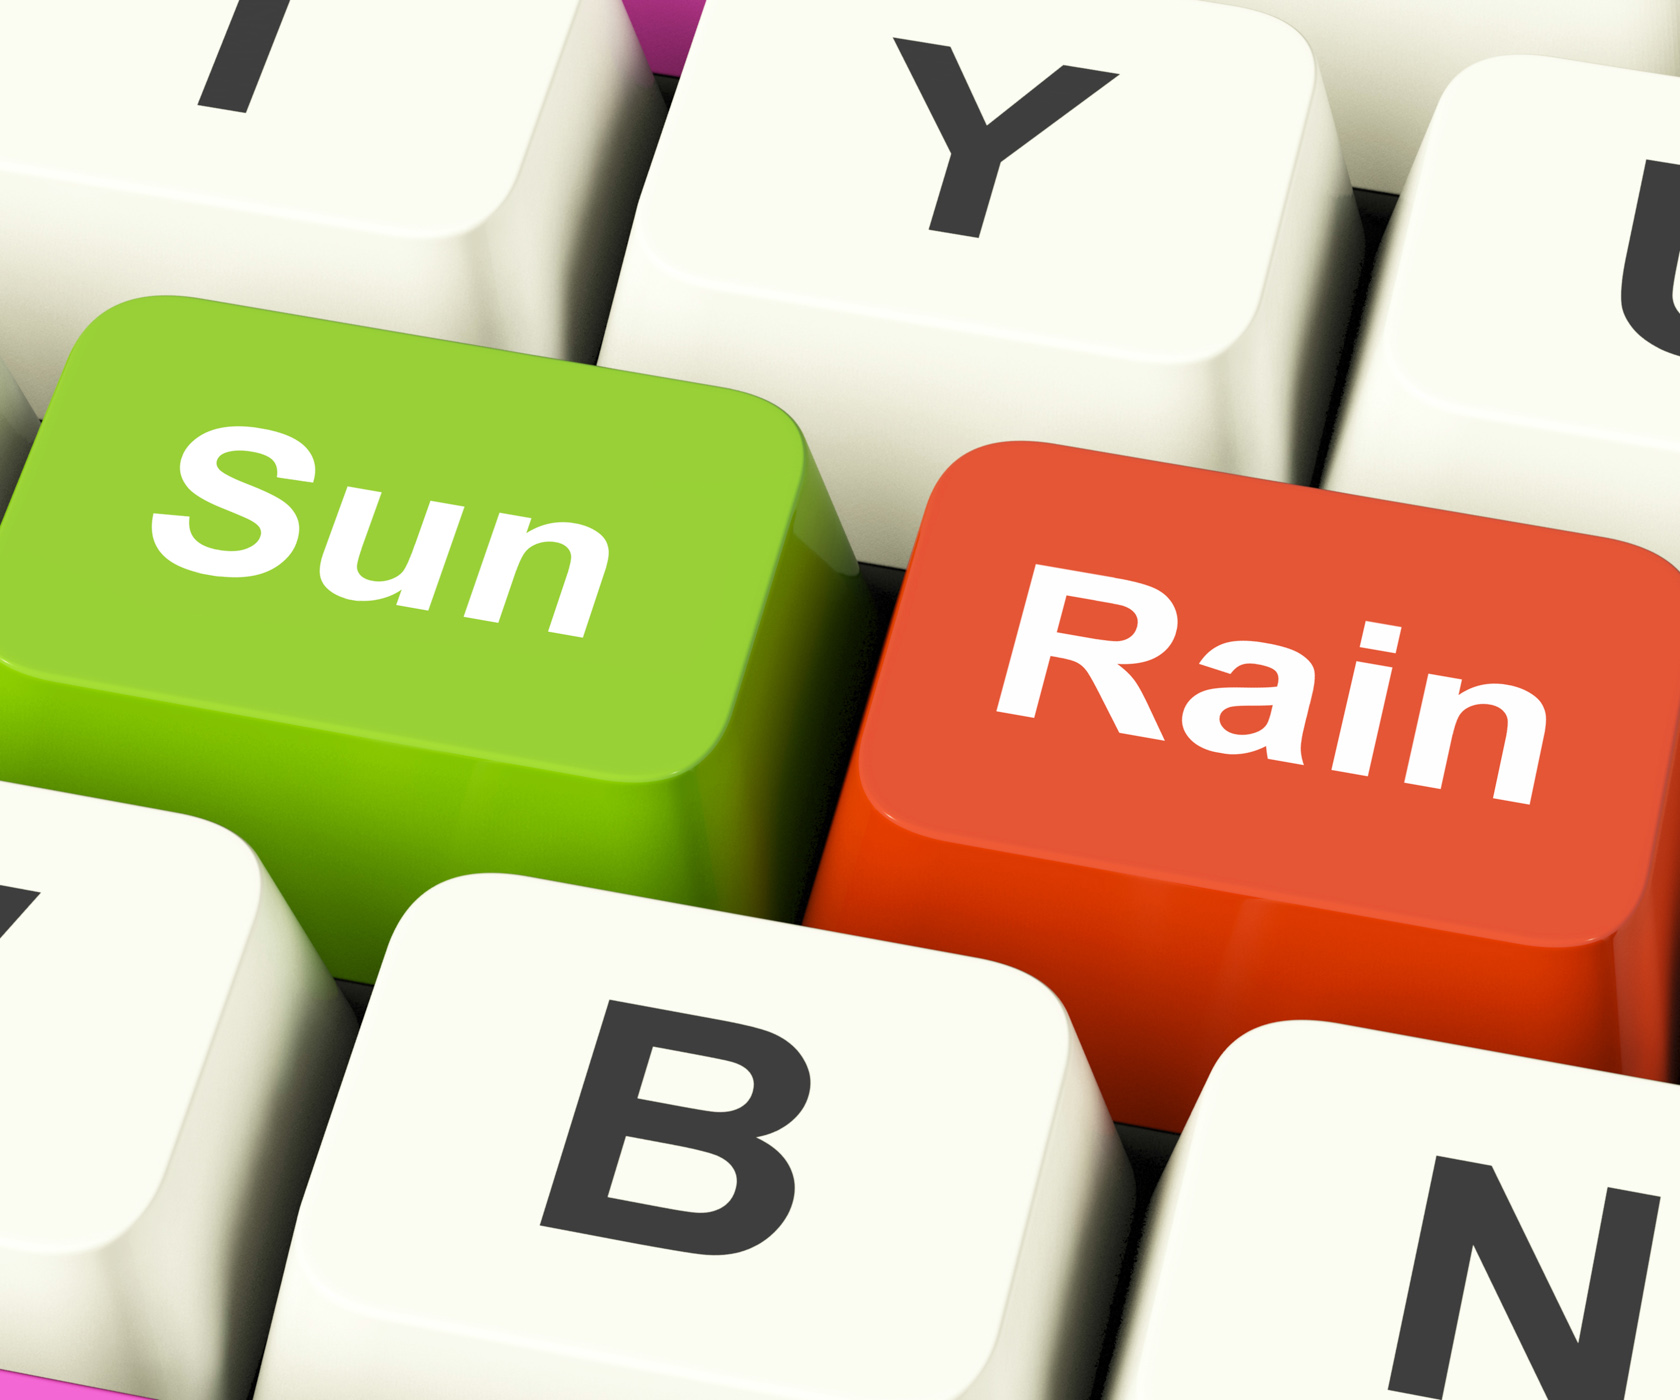 Sun Rain Keys Mean Weather And Seasons, Badweather, Rainy, Web, Weather, HQ Photo